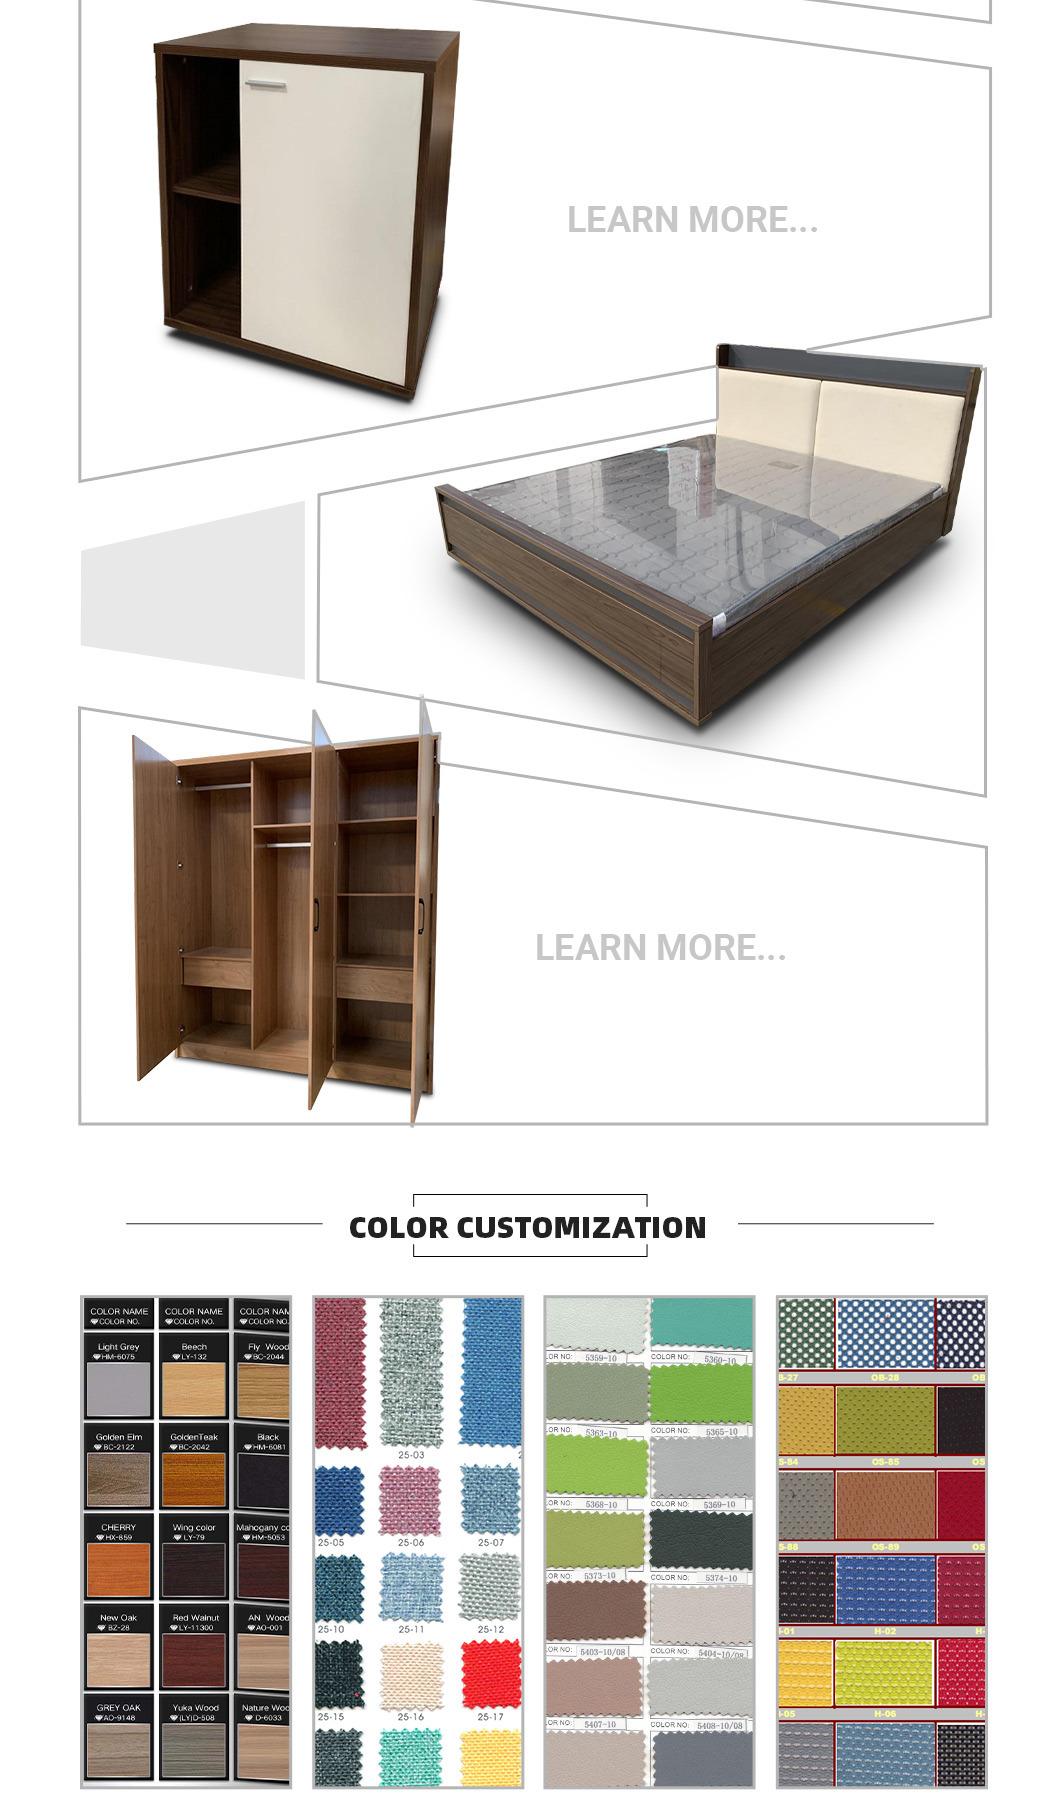 Foshan Top Furniture Acrylic Table New Design Living Room Furniture UL-T645